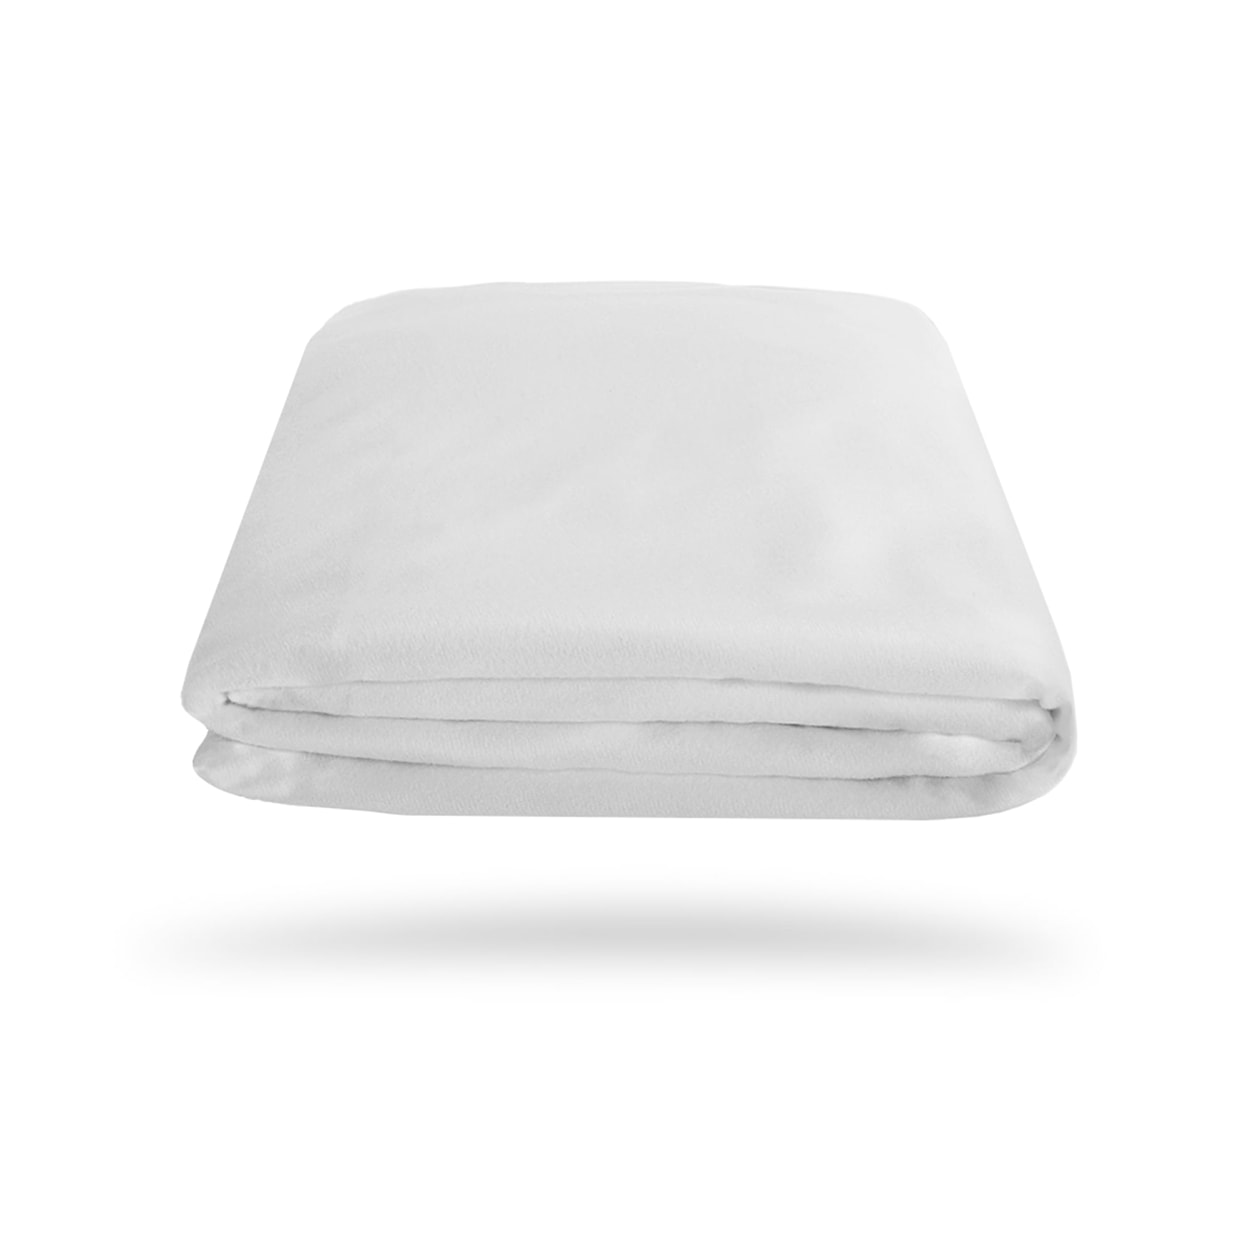 Bedgear iProtect Sofa Protector Sofa Bed Mattress Protector - Twin